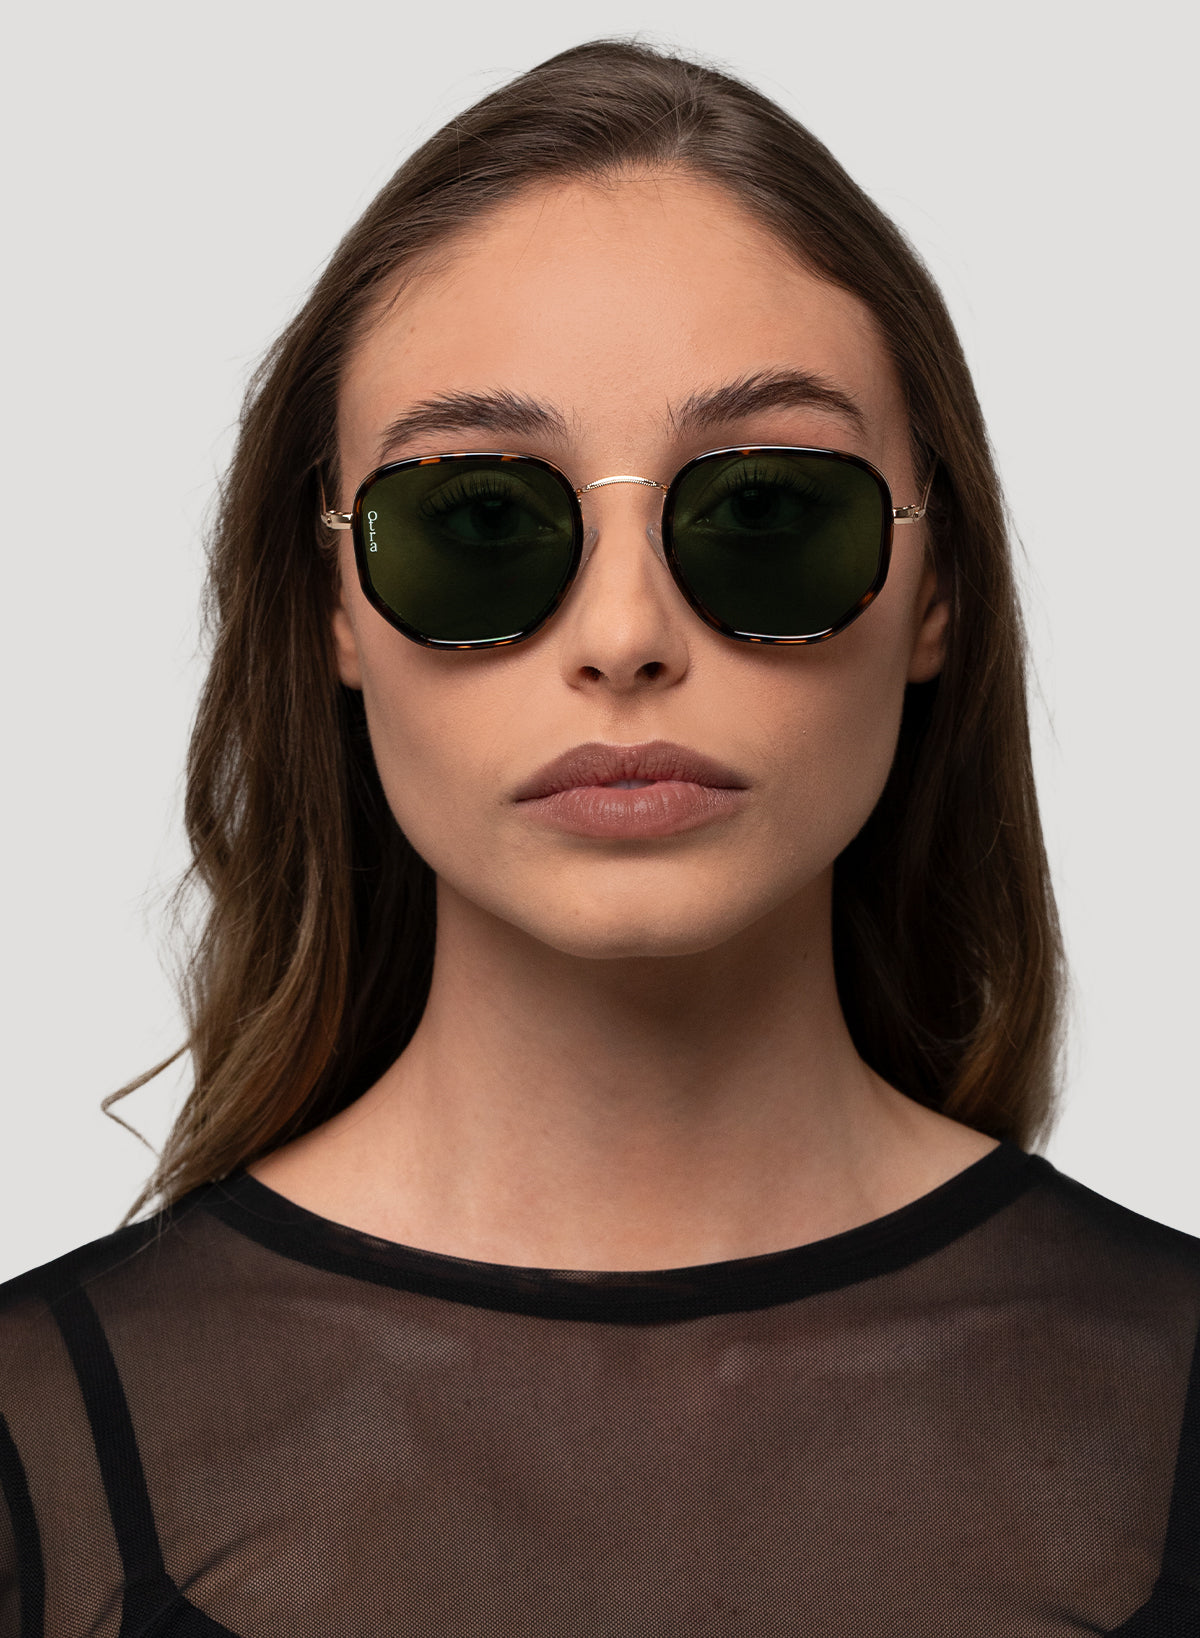 Model wearing Tate glasses in tortoiseshell